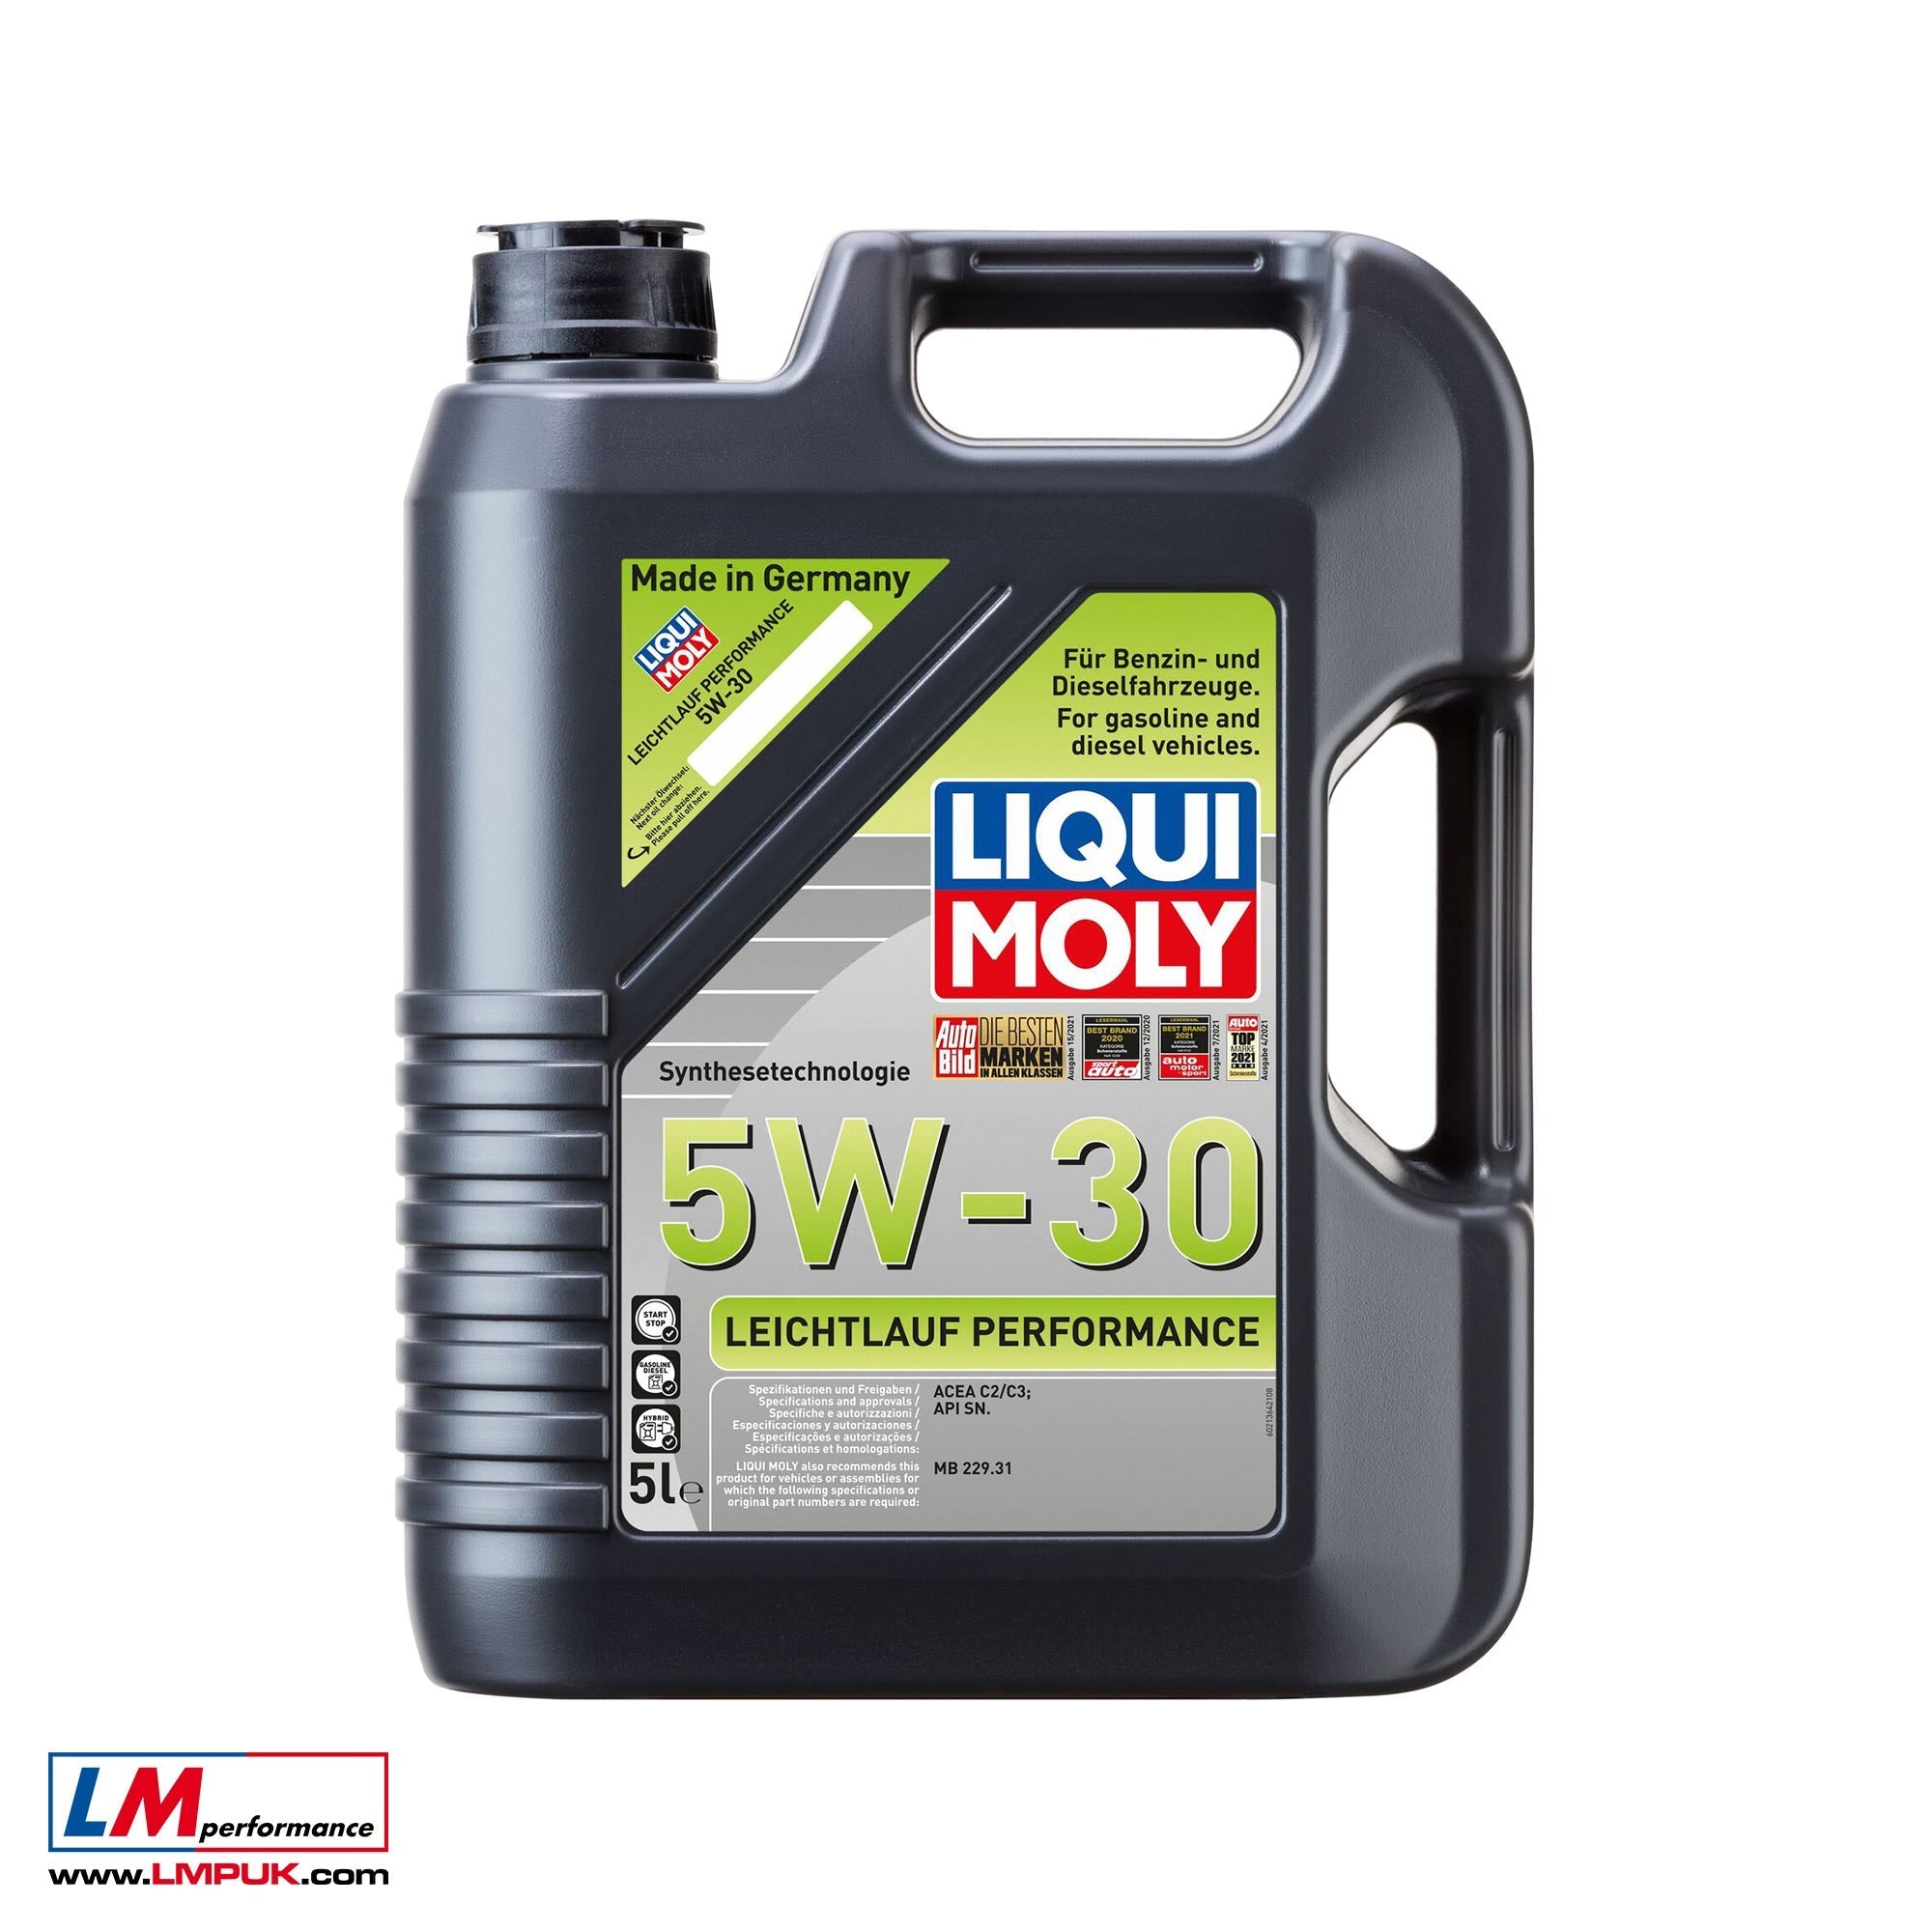 Leichtlauf Performance 5W-30 Engine Oil by LIQUI MOLY – LM Performance